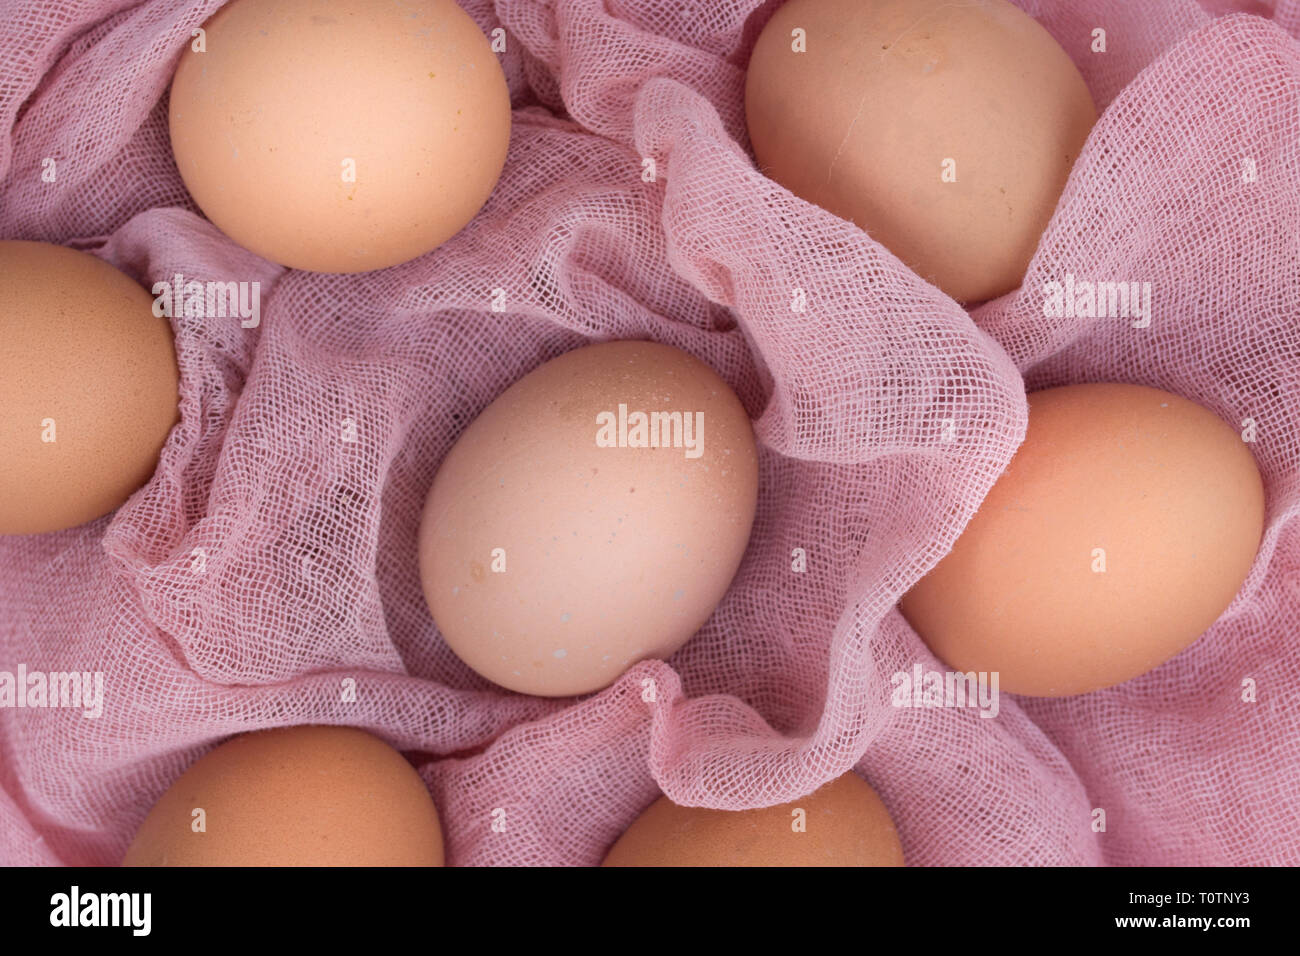 Los huevos de pascua en tela de color rosa. Foto de stock